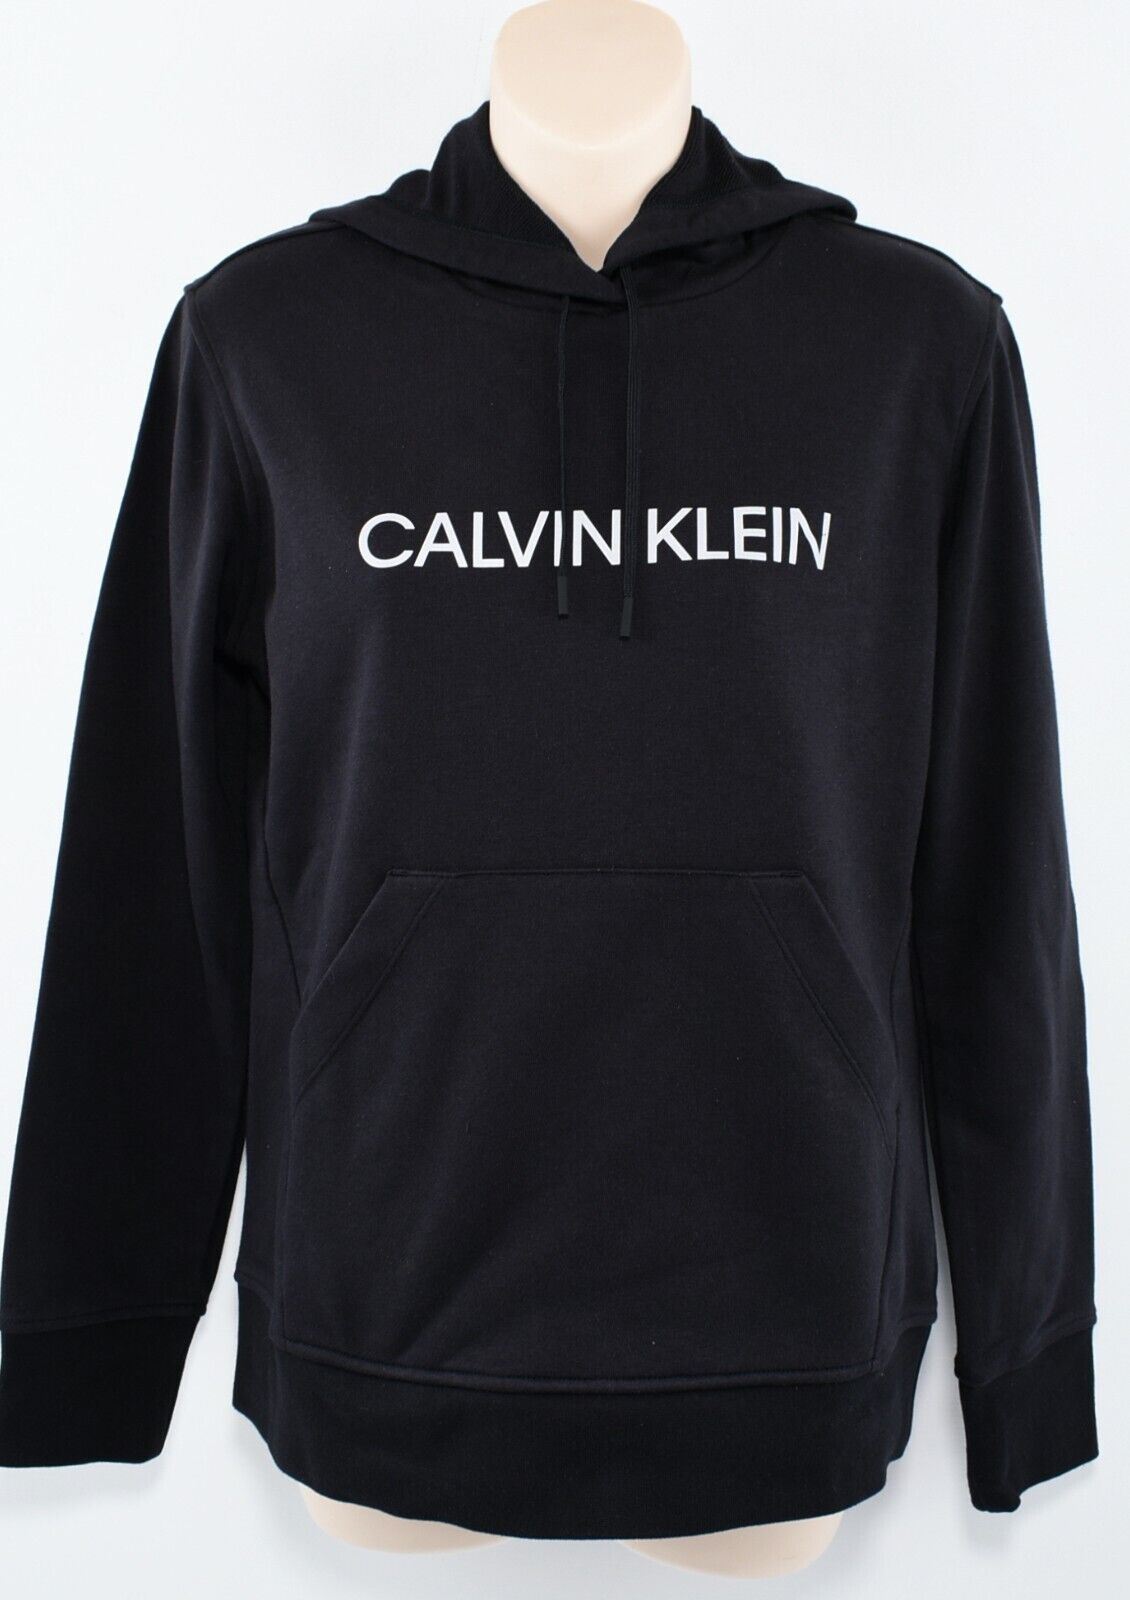 CALVIN KLEIN Performance Women's Hoodie, Hooded Sweatshirt, Black size M (UK 12)